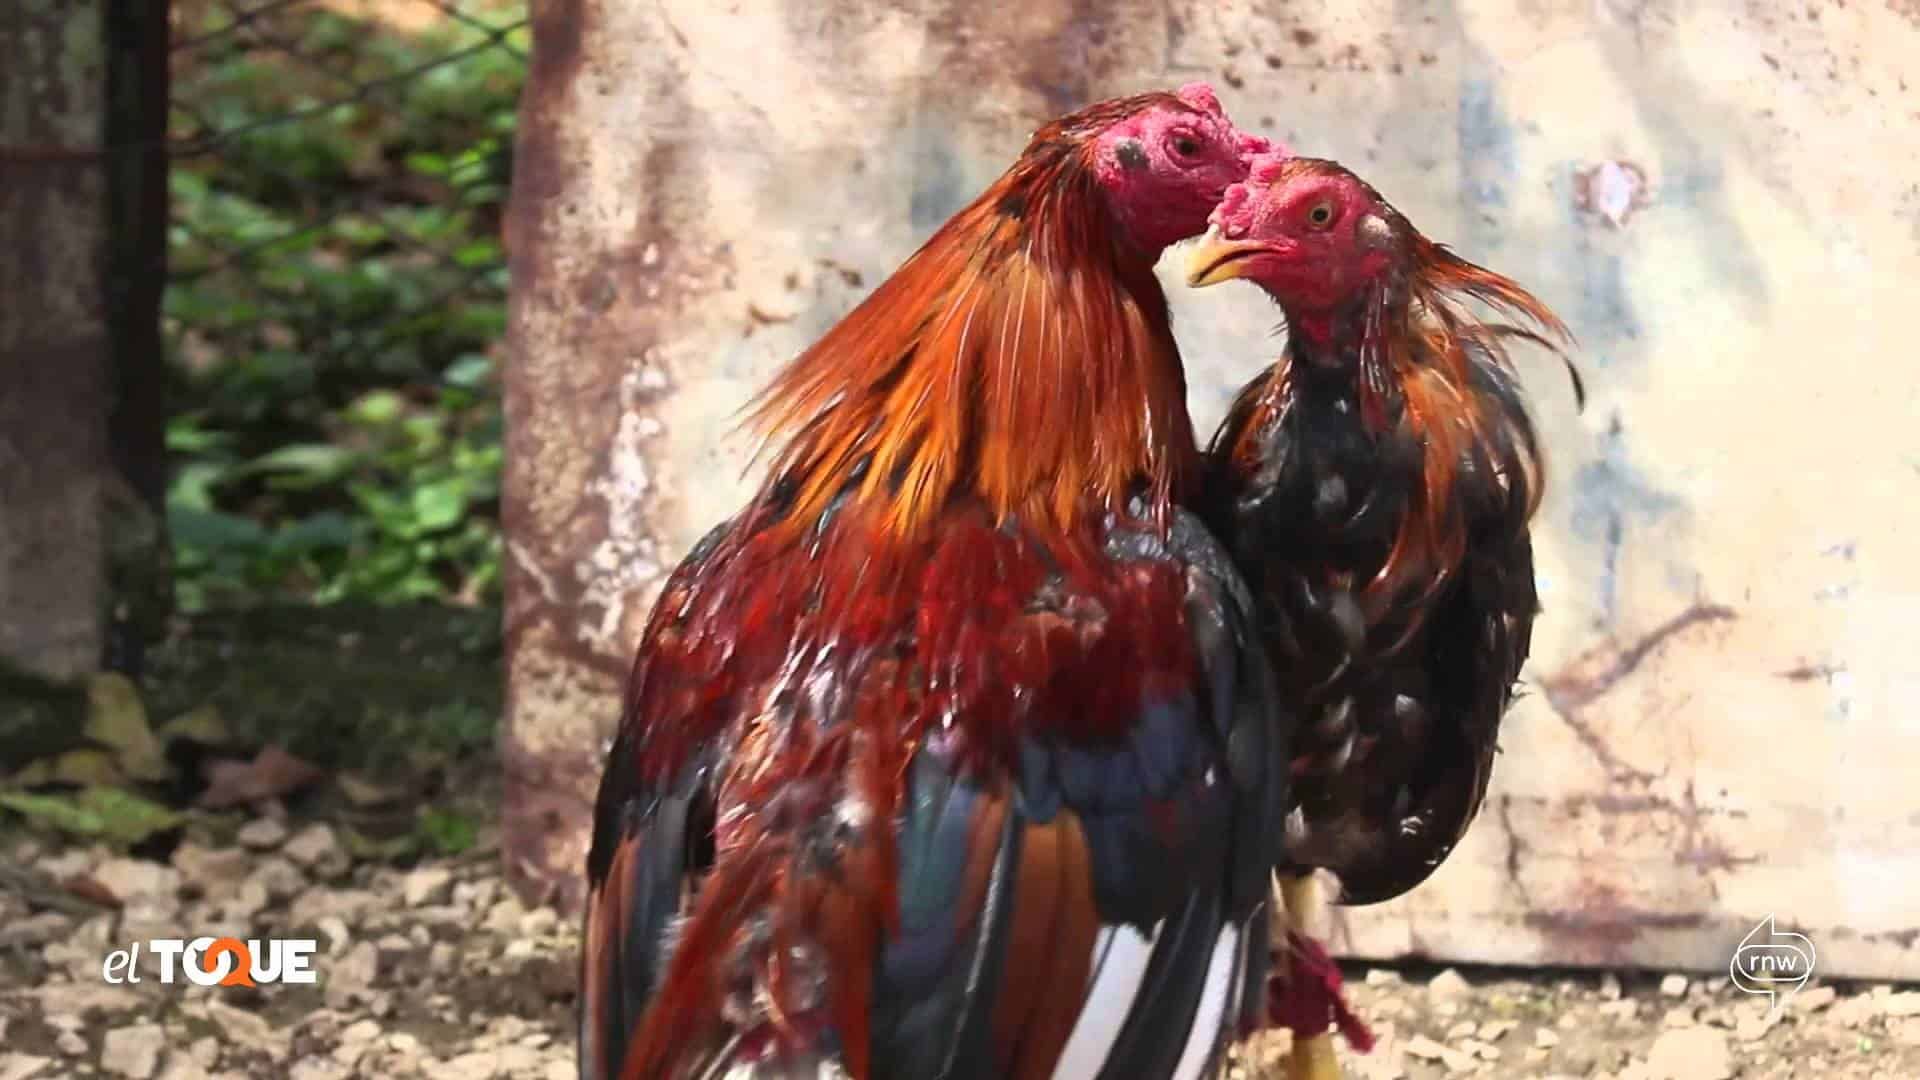 El polémico &#8220;arte&#8221; de criar gallos de peleas